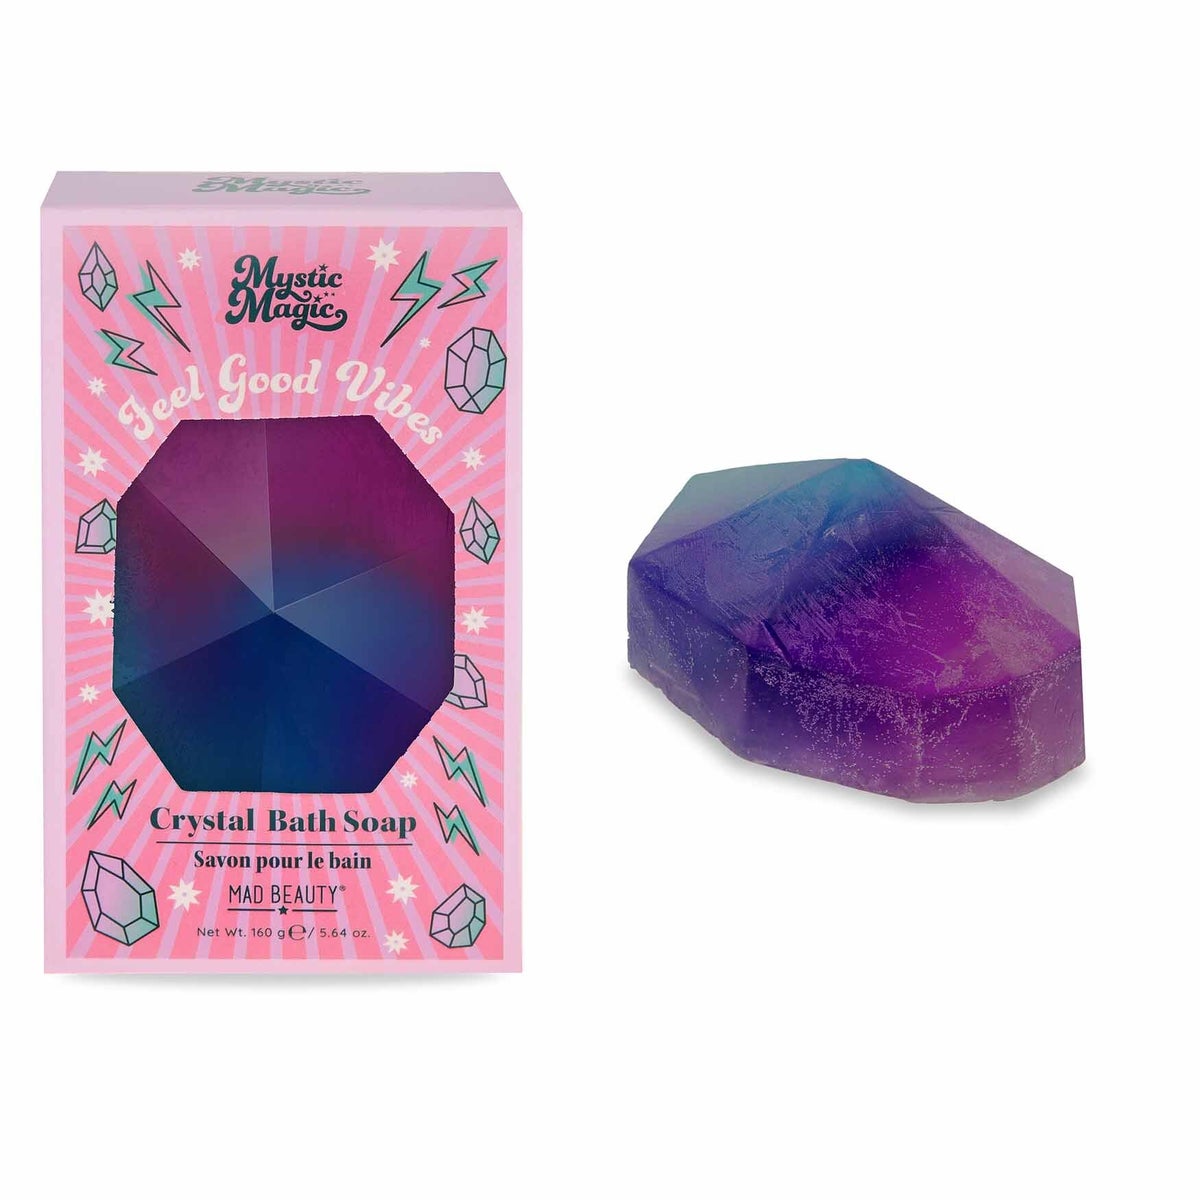 Mystic Magic - Bath Soap Crystal -  Indigo and Violet